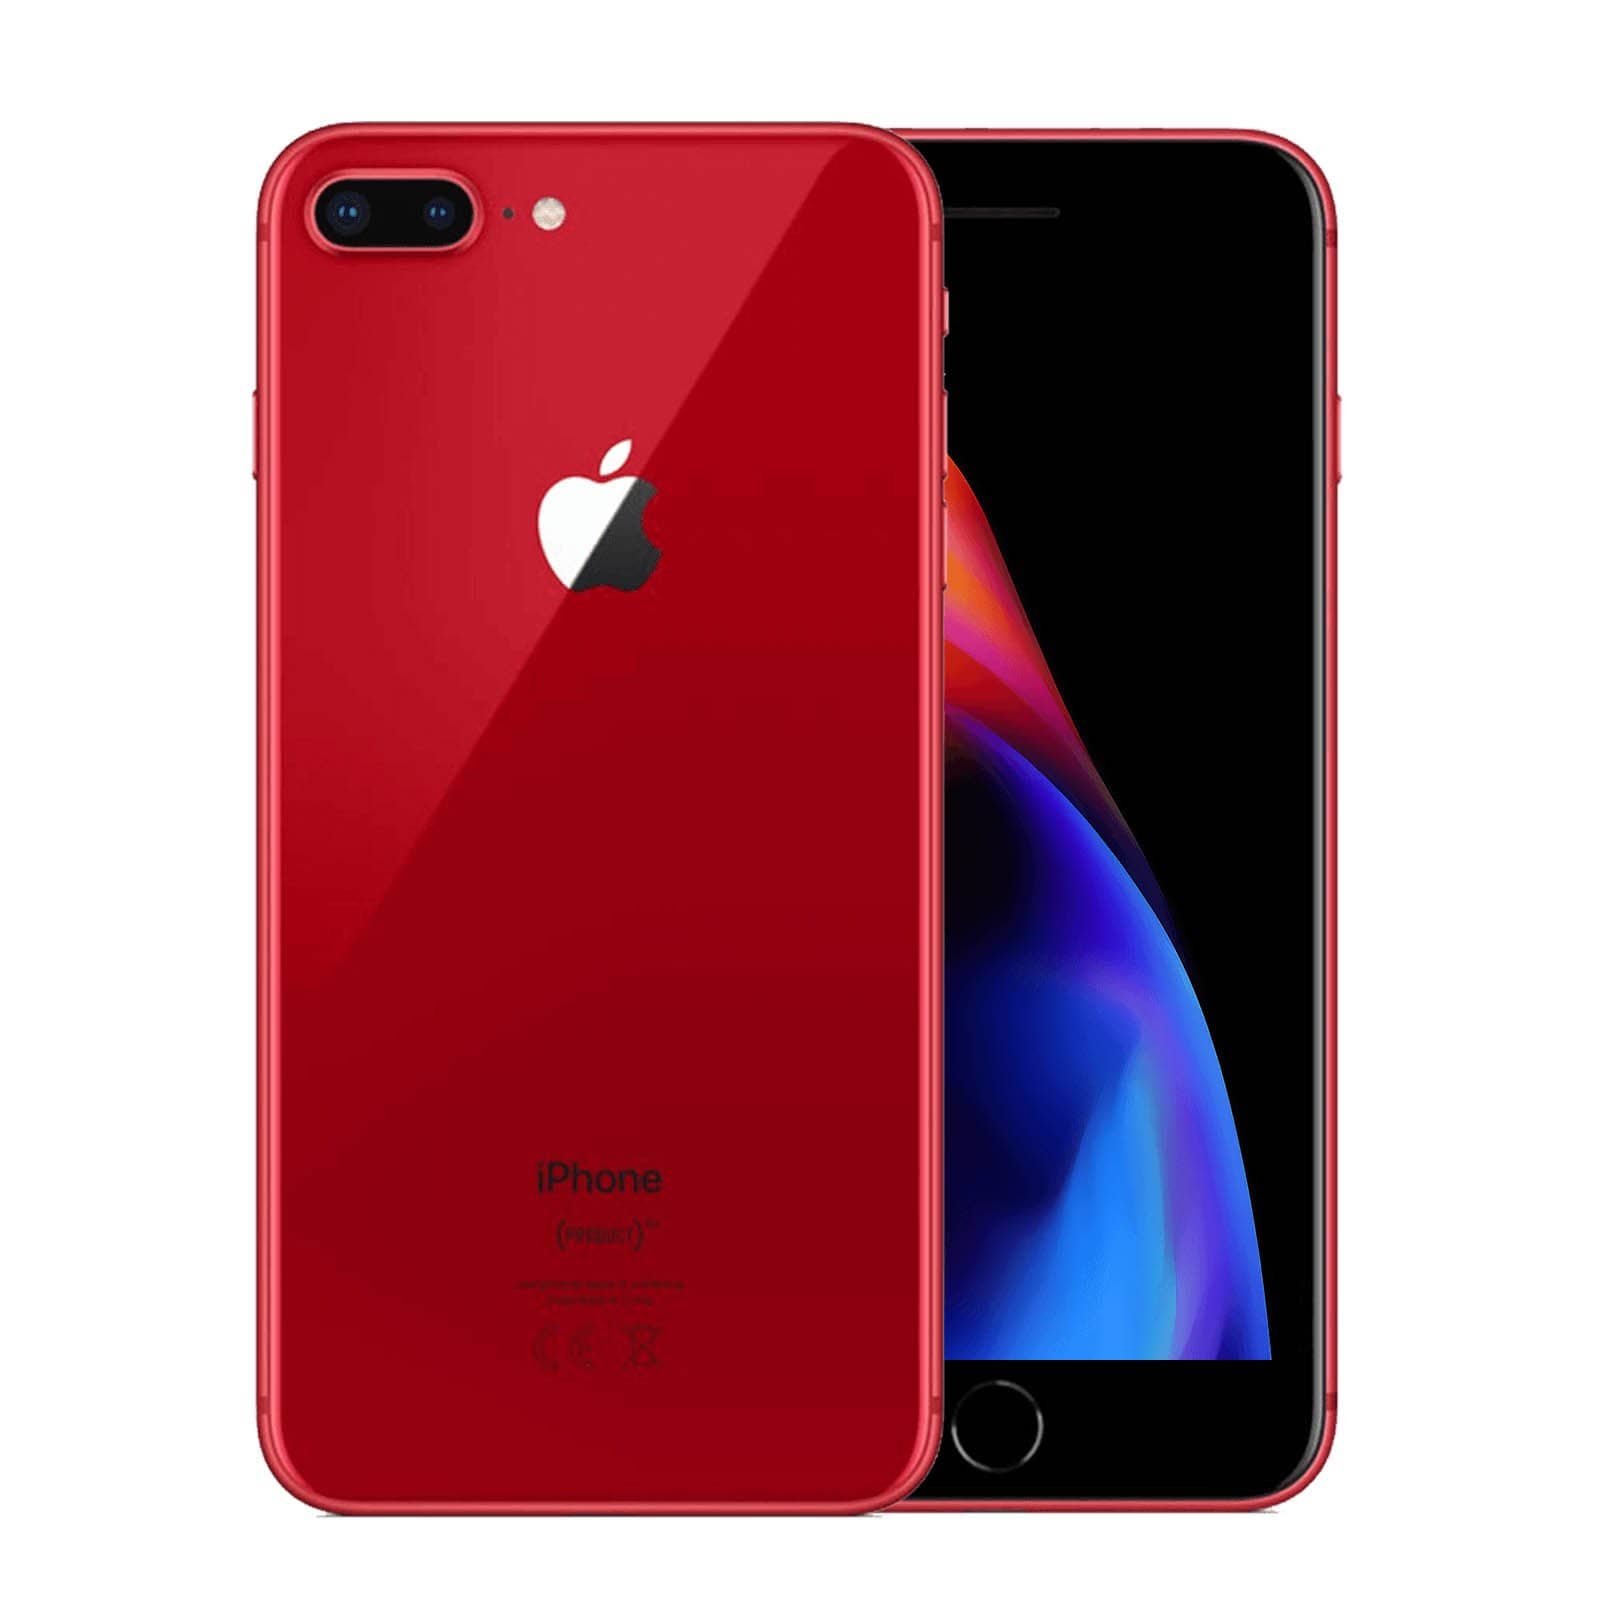 Apple iPhone 8 Plus 256GB Product Red Pristine - Unlocked 256GB Product Red Pristine